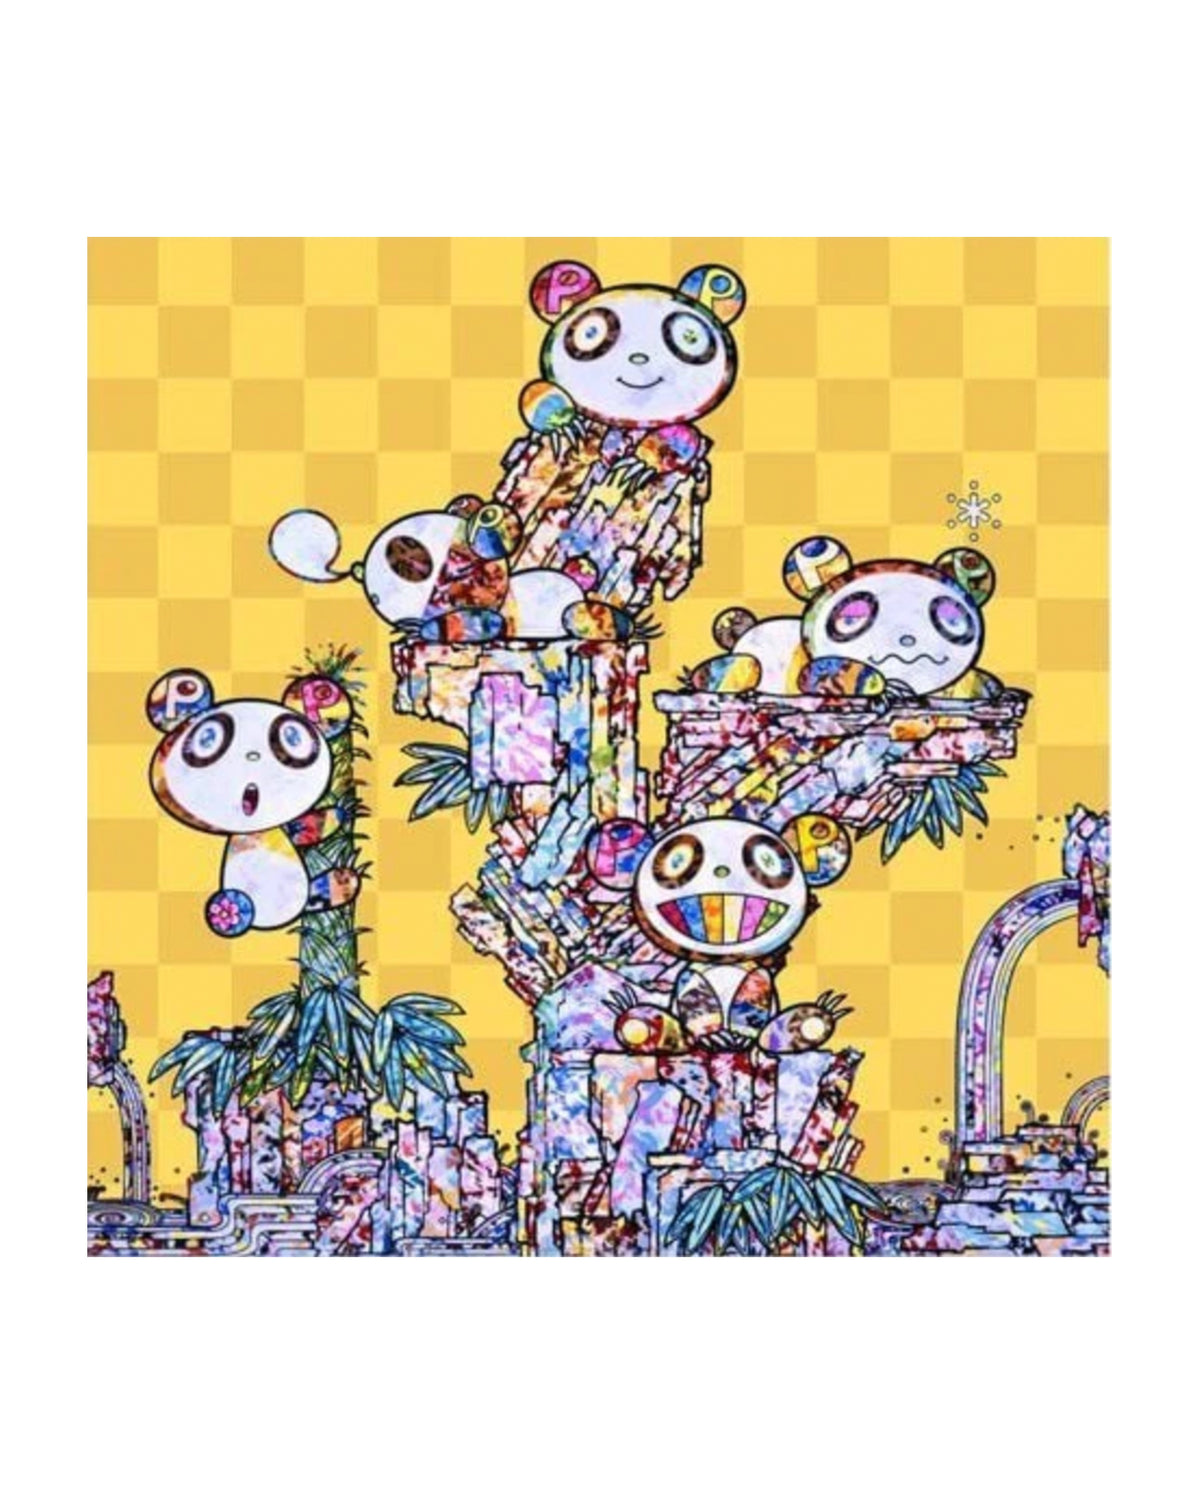 Takashi Murakami Panda Cubs 1, 2019